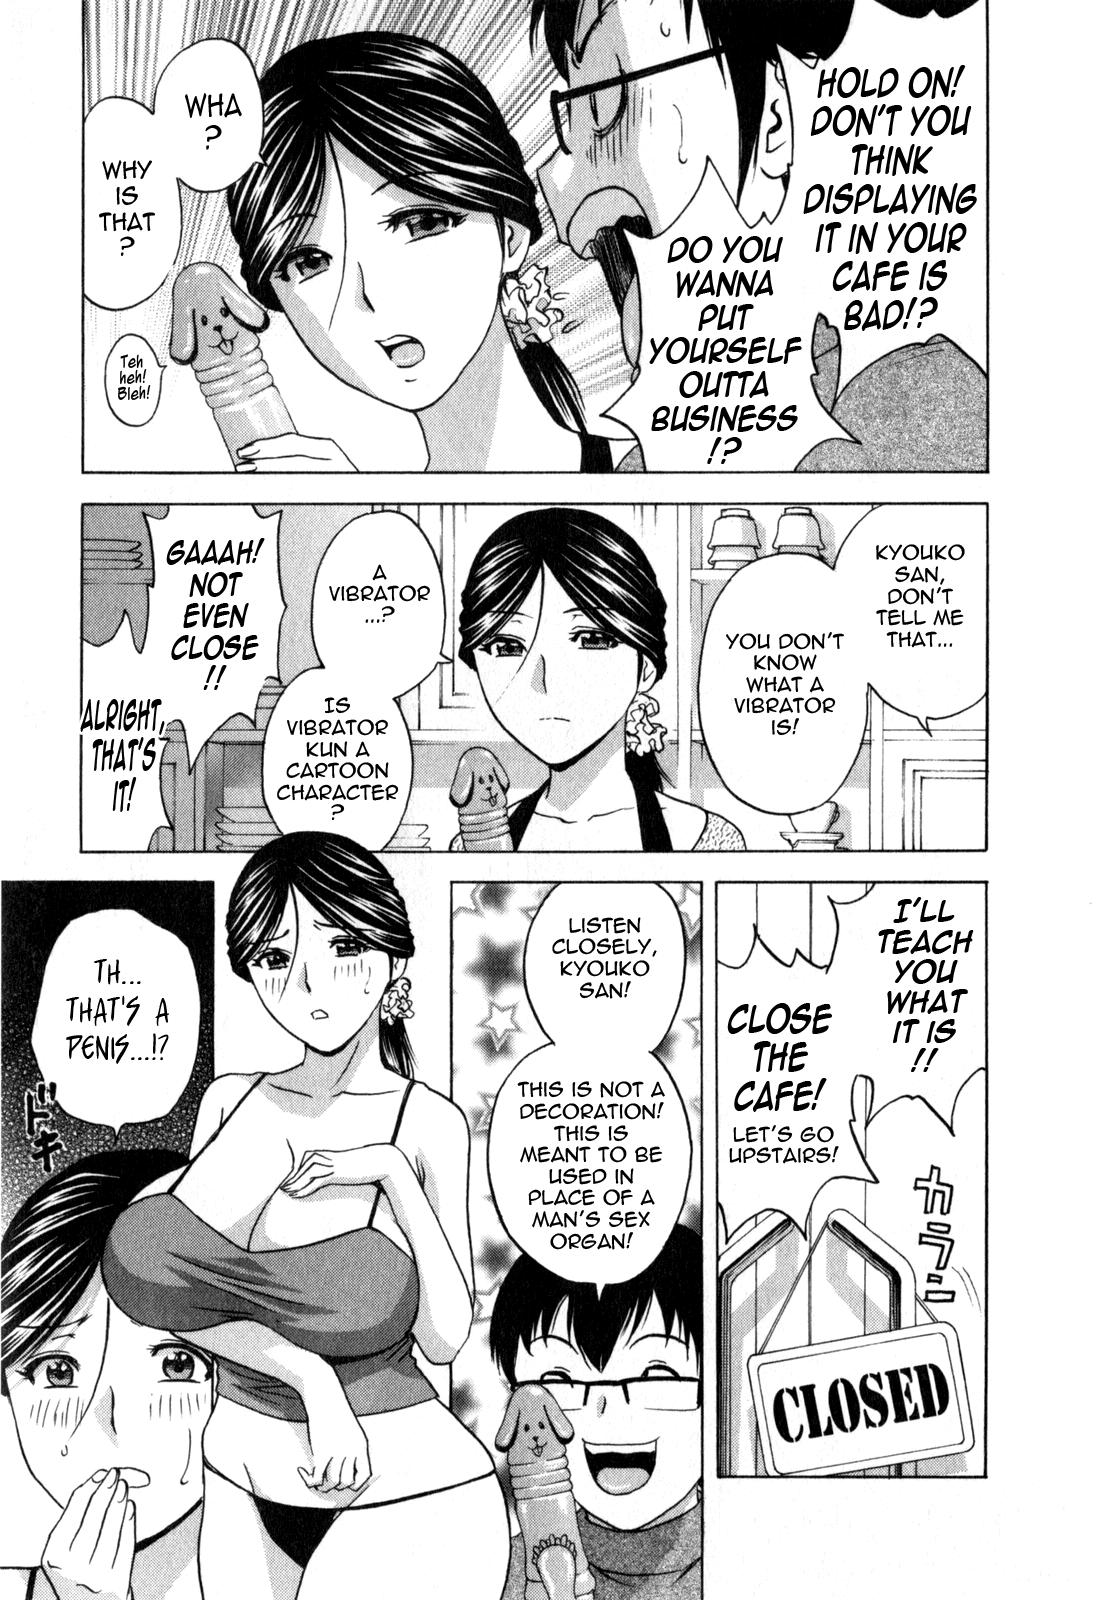 [Hidemaru] Life with Married Women Just Like a Manga 3 - Ch. 1-6 [English] {Tadanohito} 16